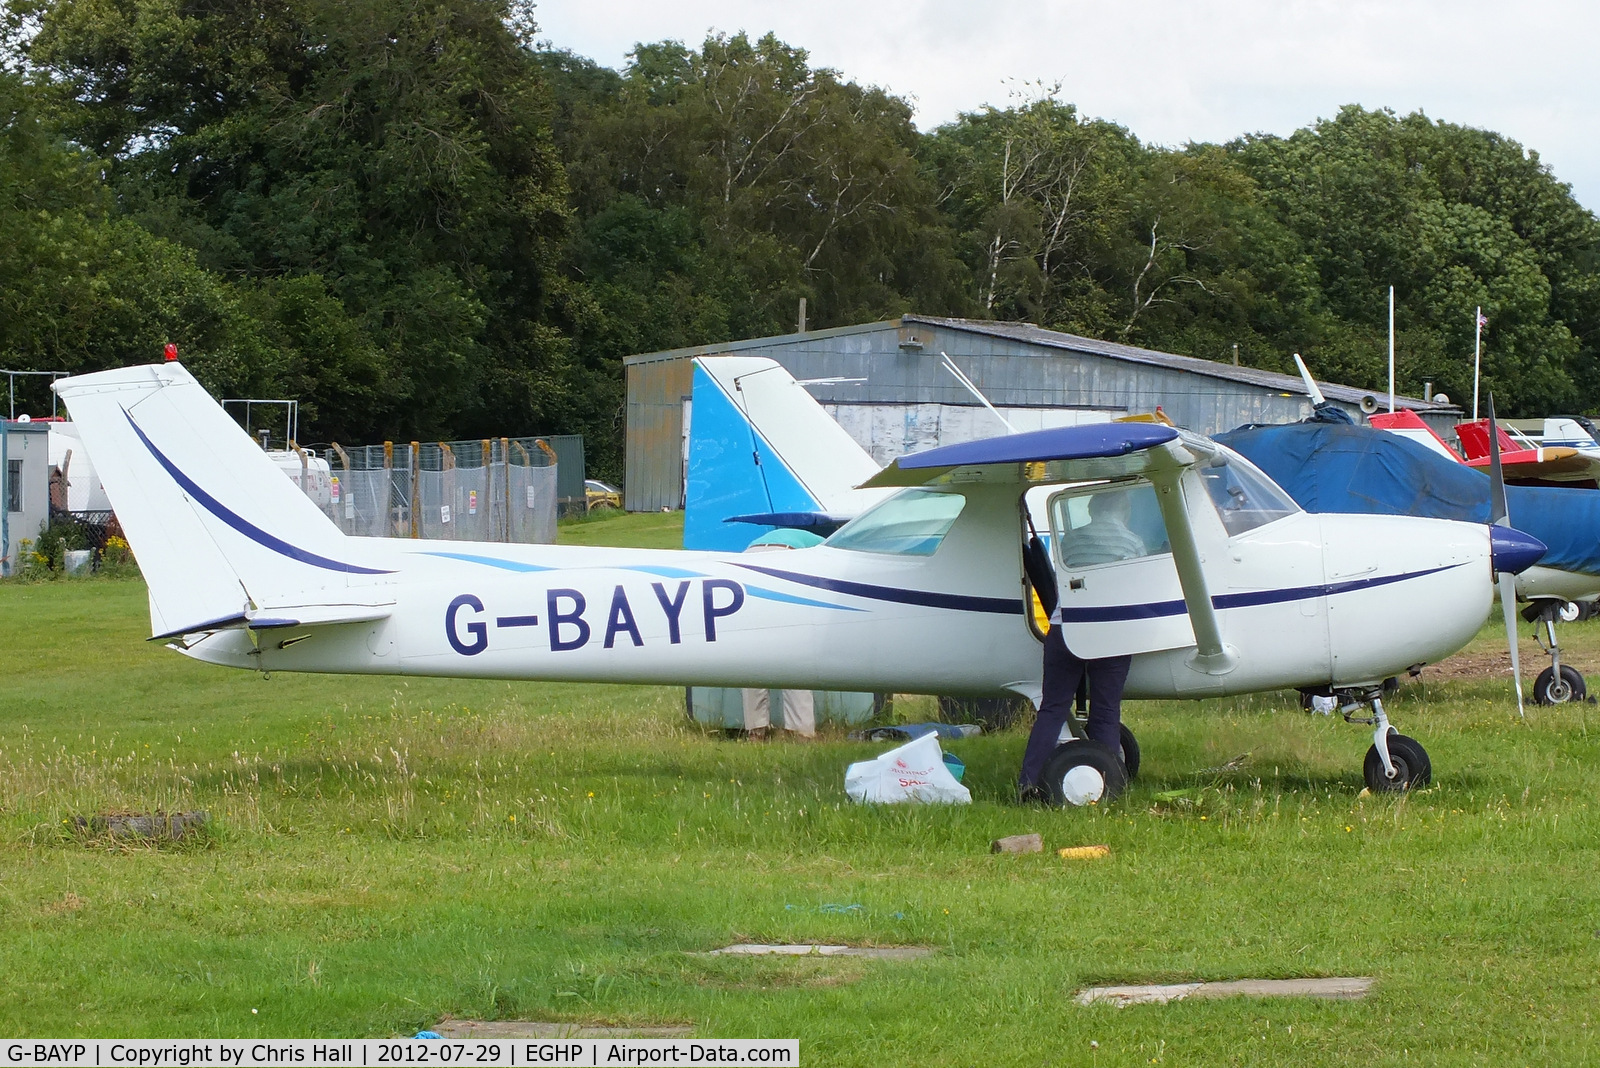 G-BAYP, 1973 Cessna 150L C/N 150-74017, at Popham Airfield, Hampshire